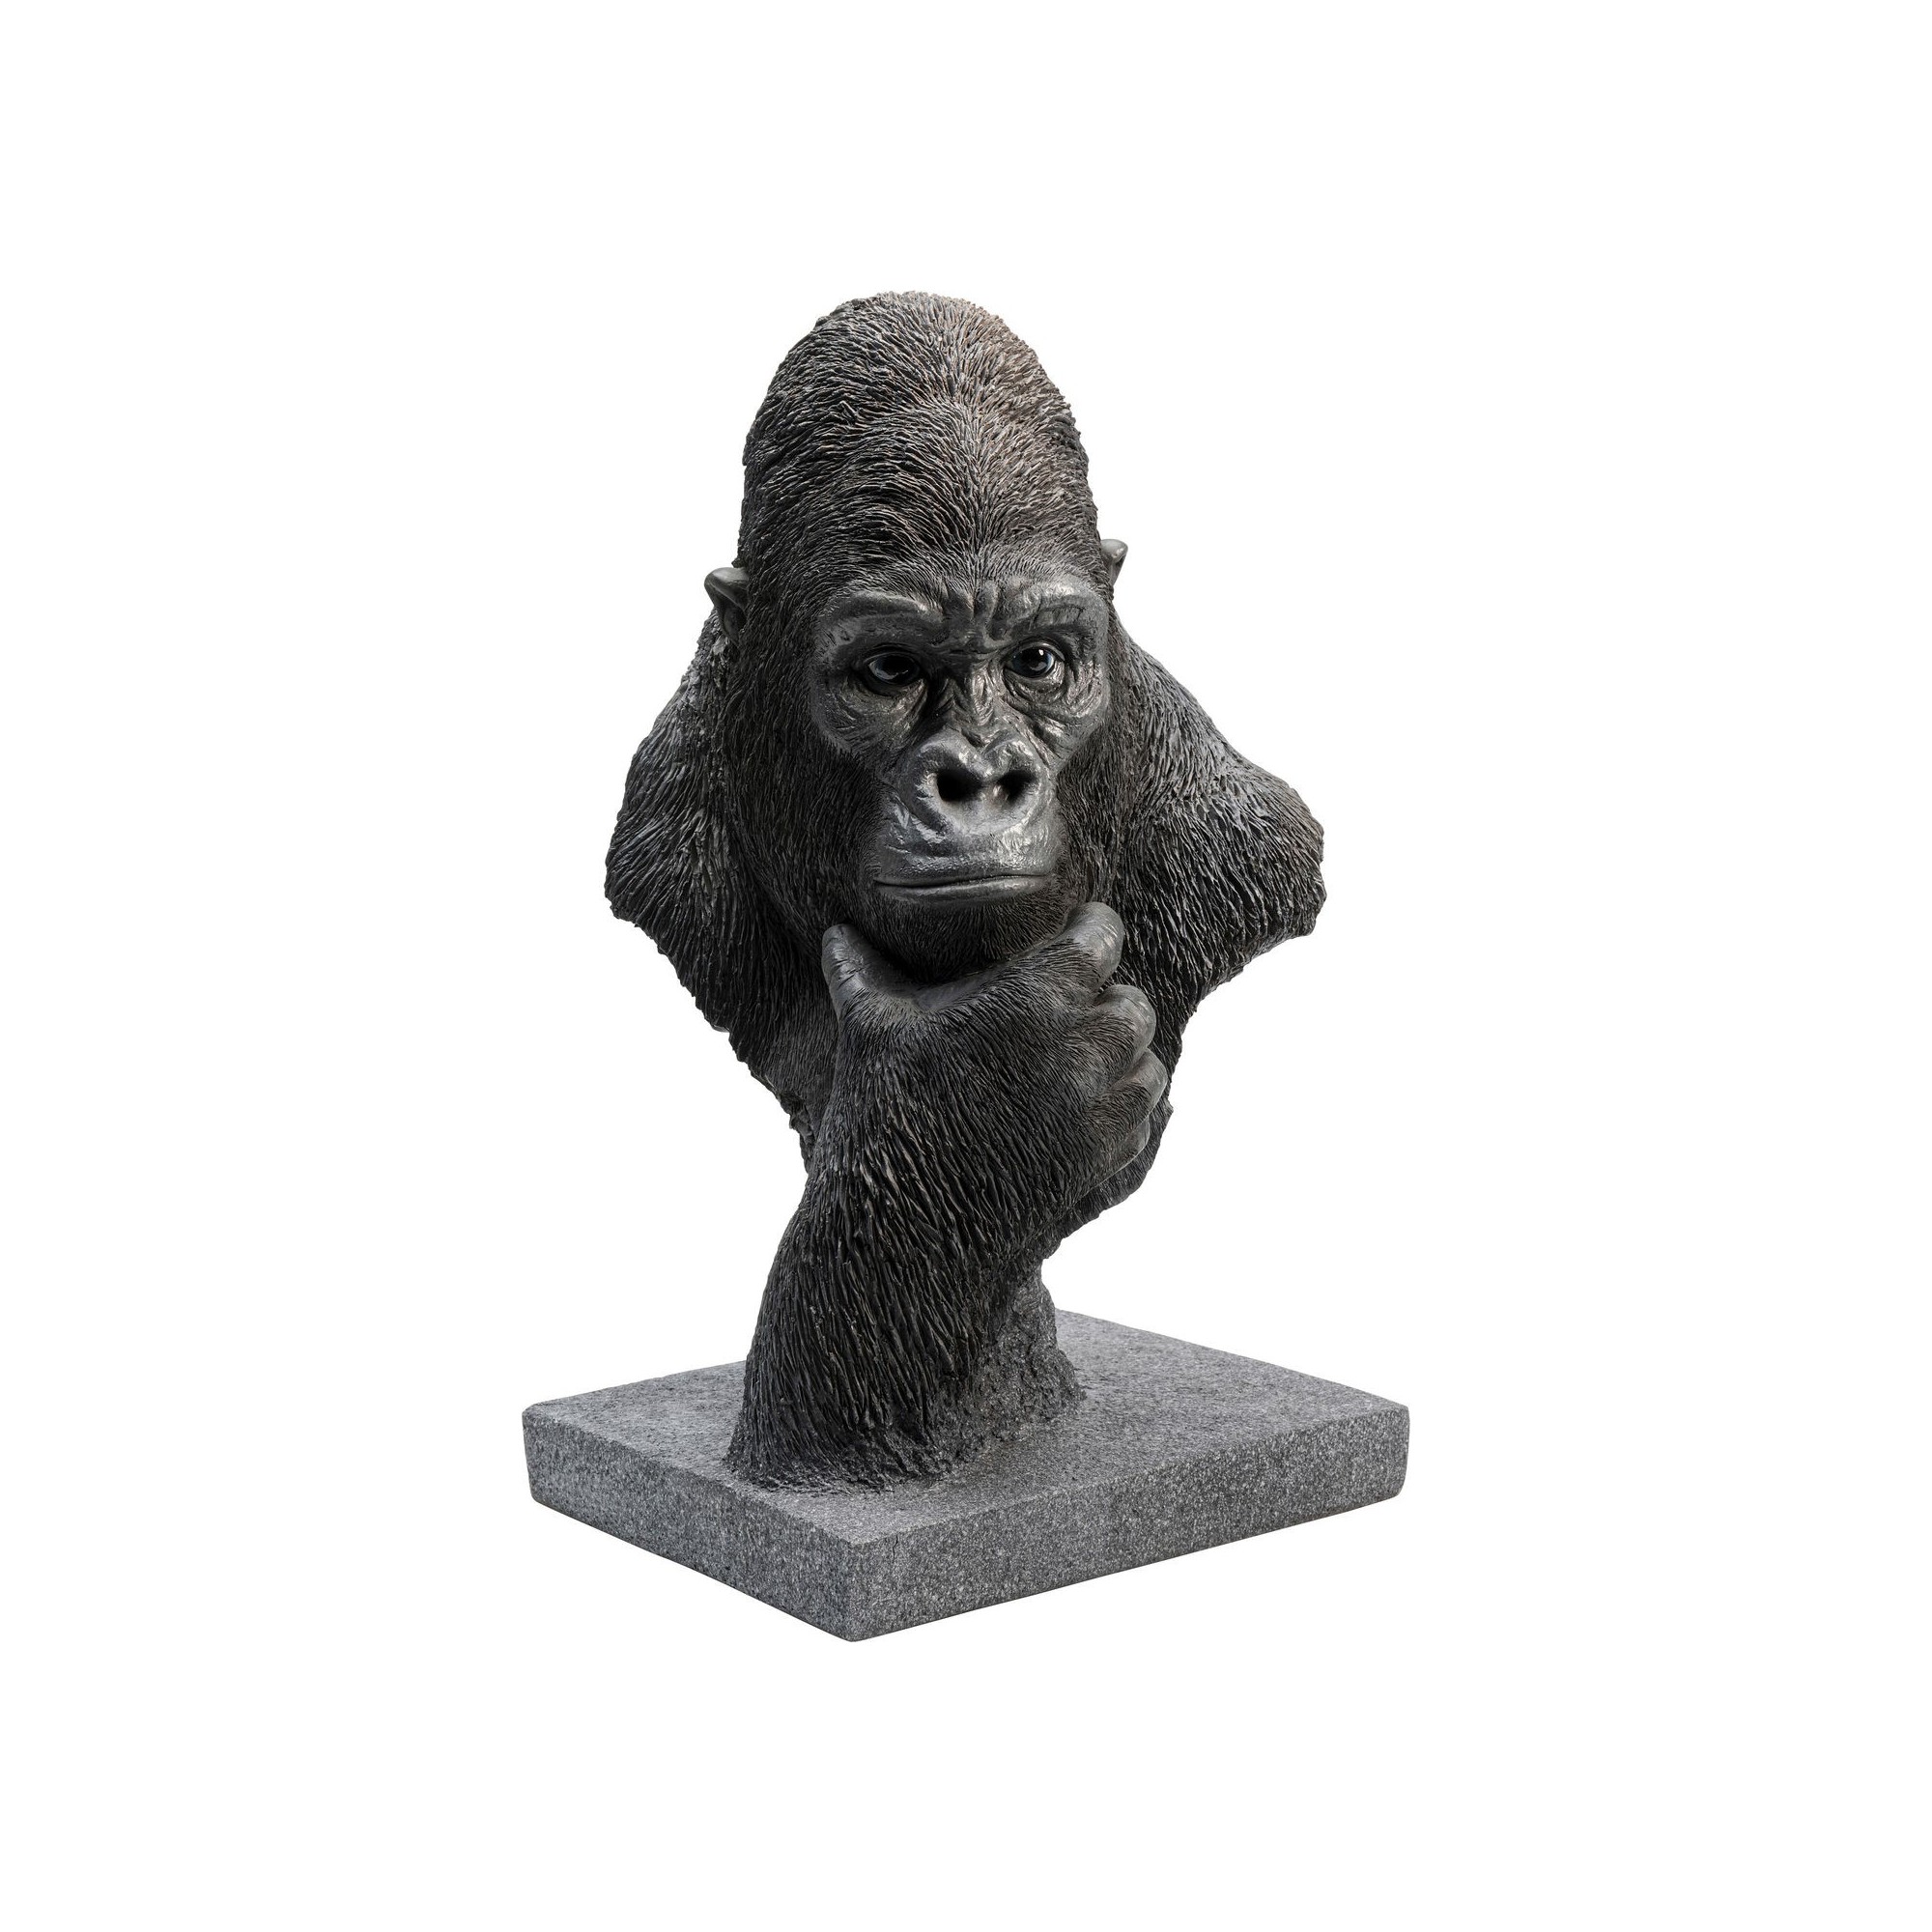 Objet décoratif Thinking Gorilla Head